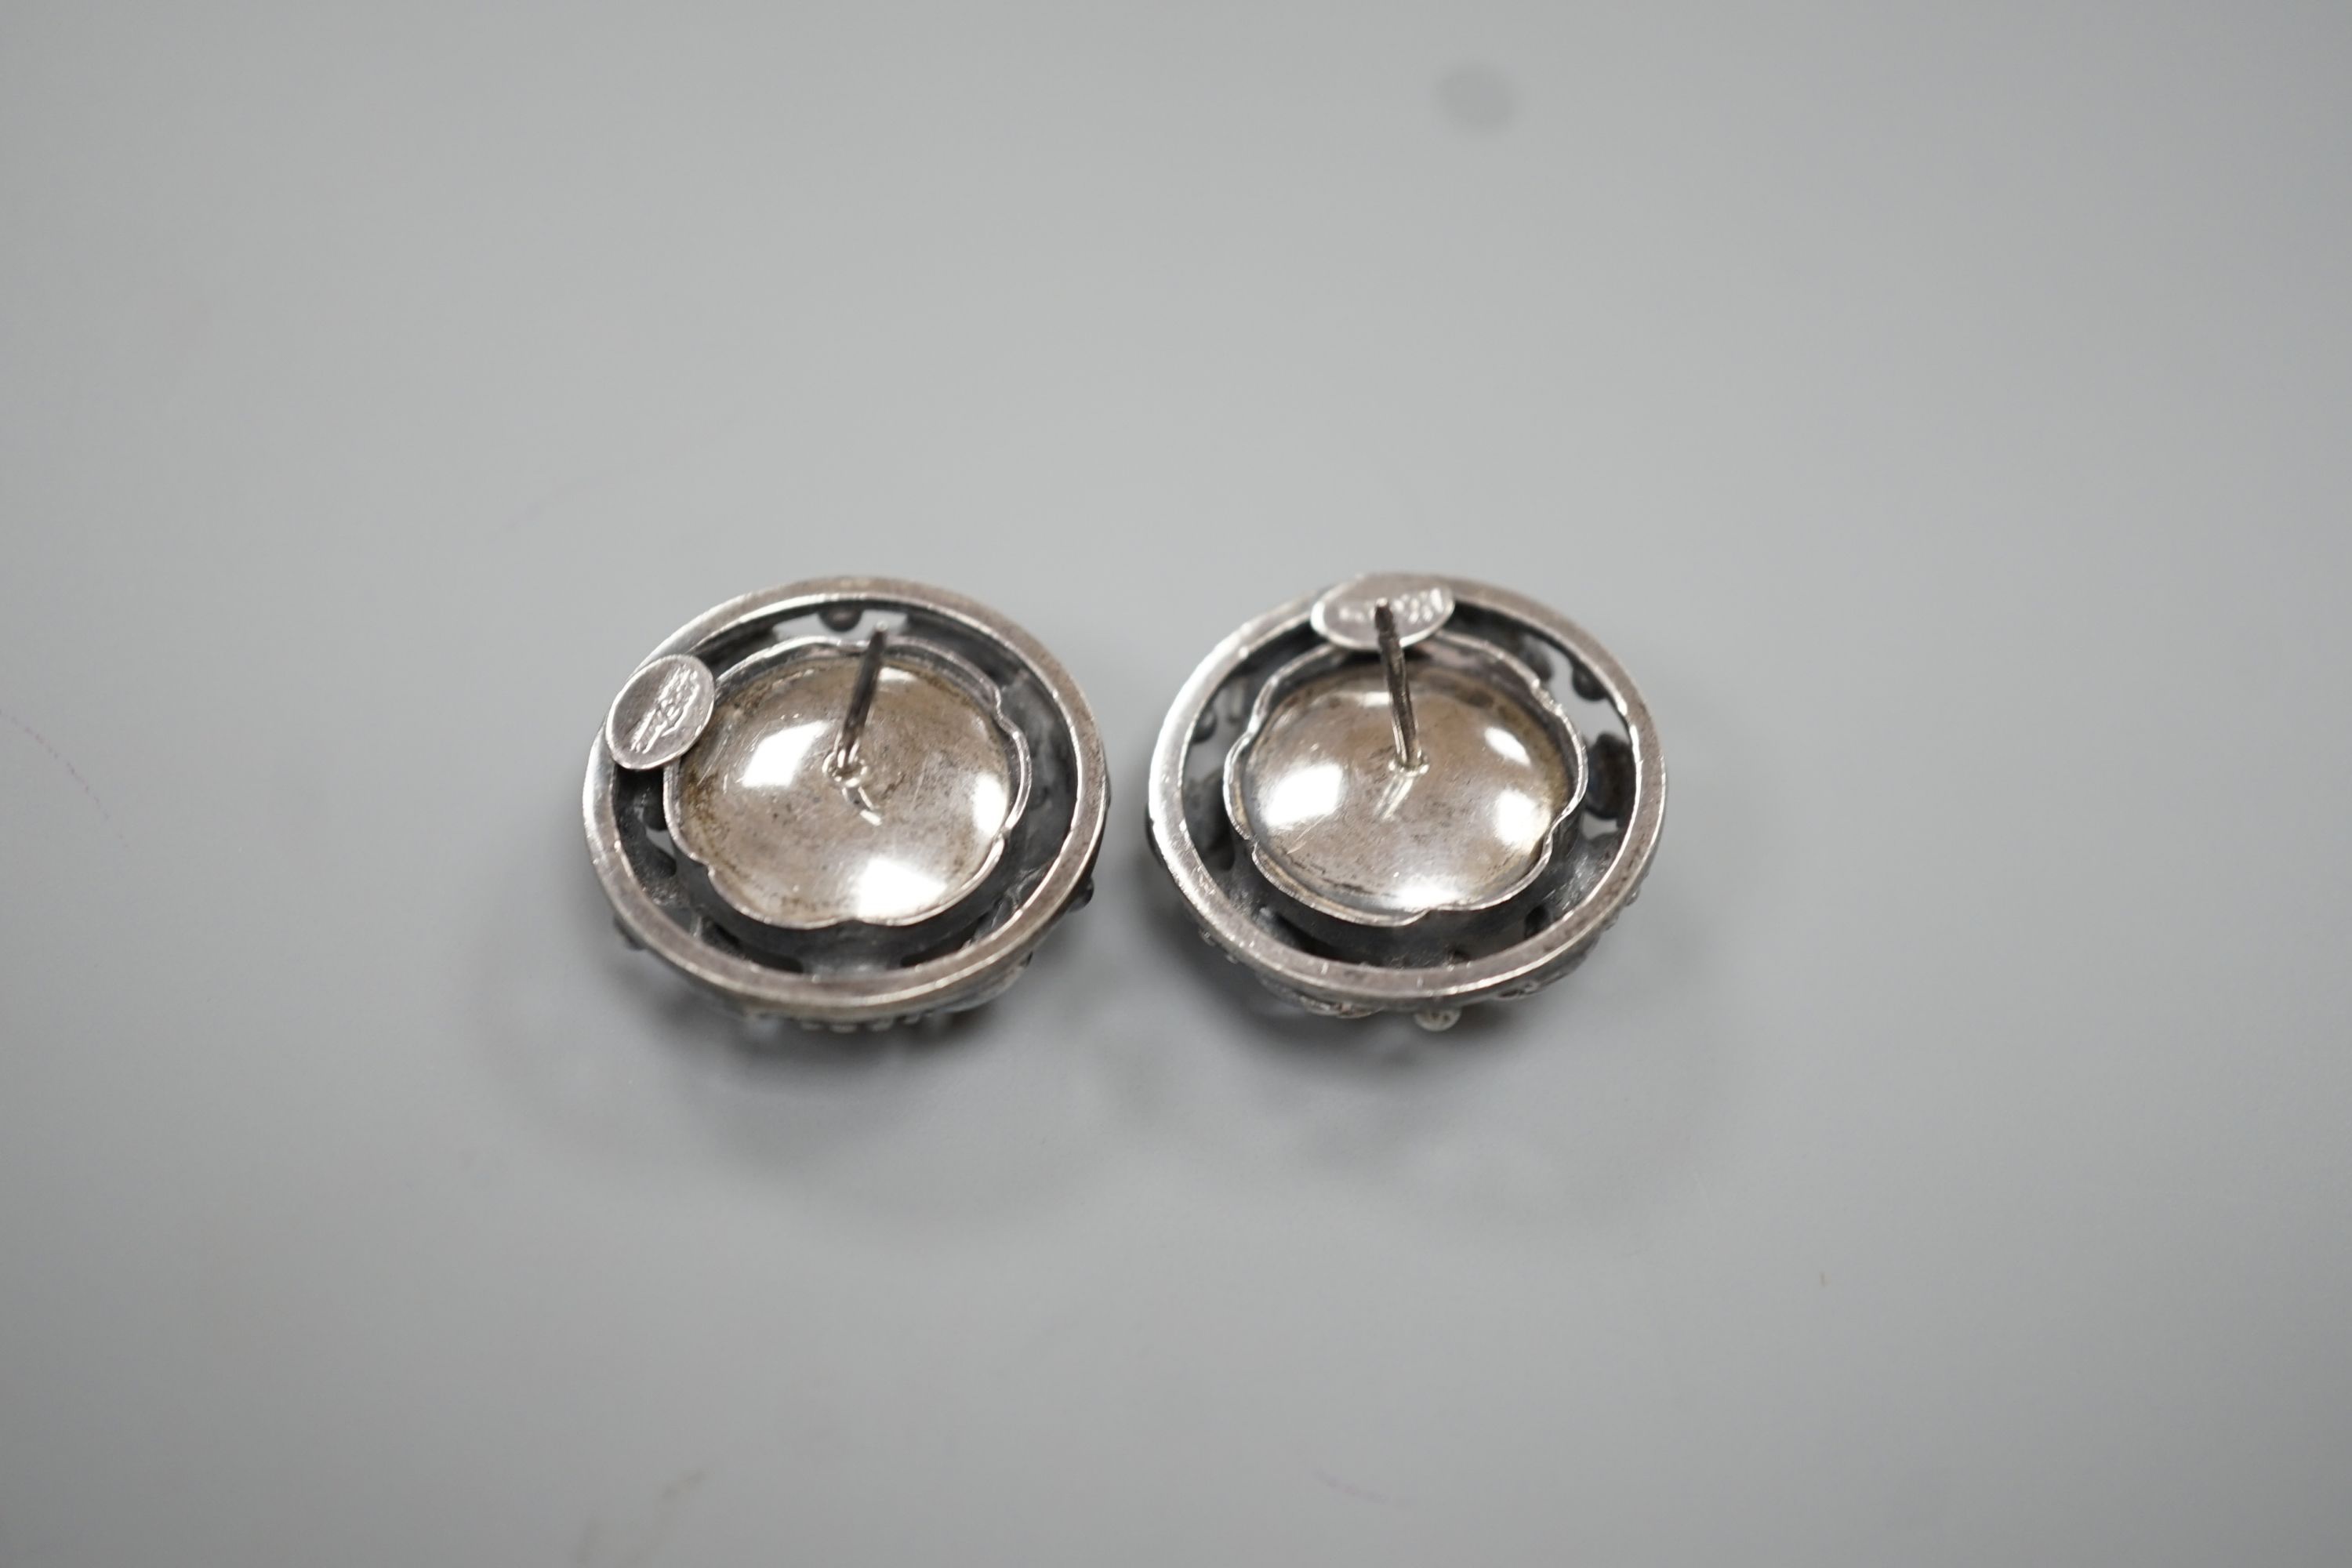 A pair Danish Niels Eric From sterling circular foliate earrings, 22mm, lacking butterflies.